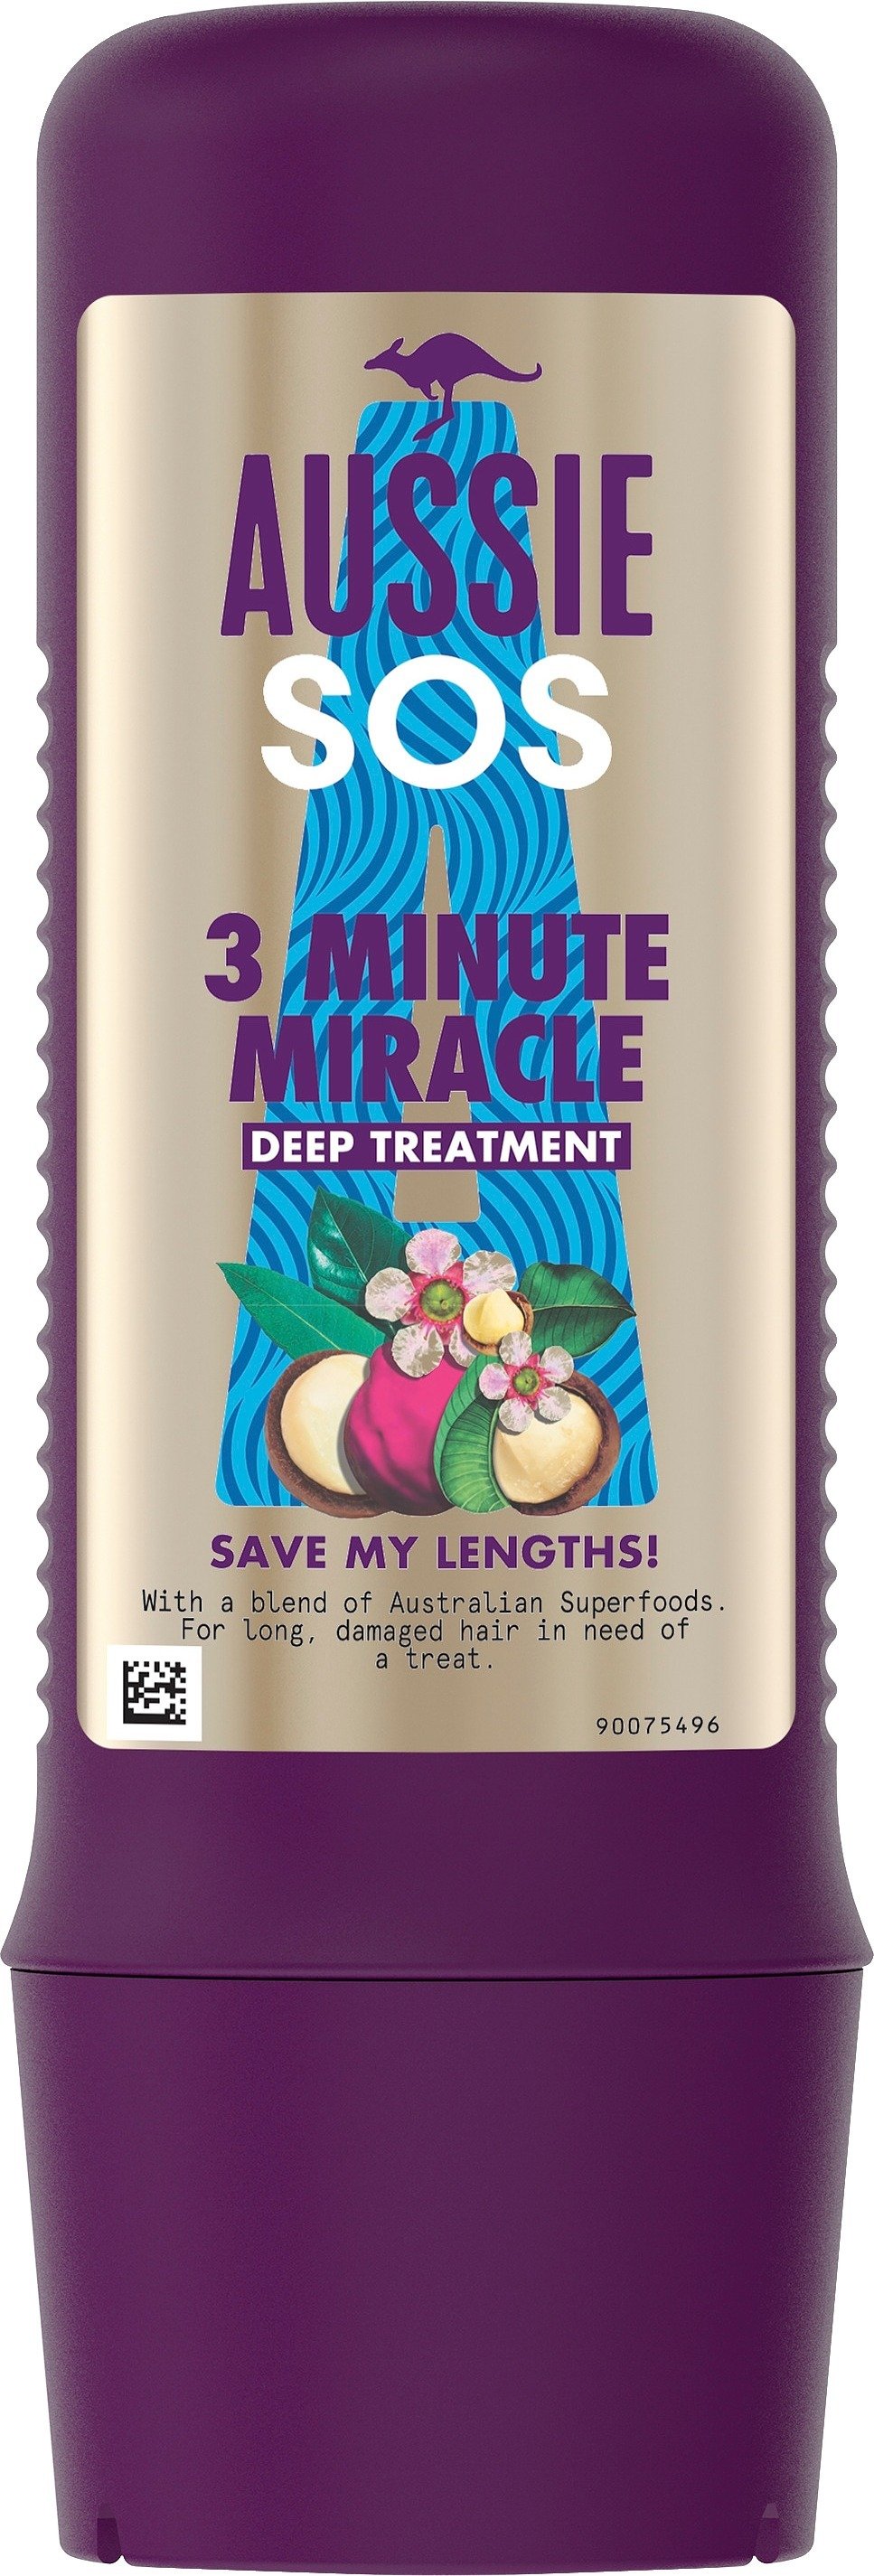 Aussie SOS Save My Lengths! 3 Minute Miracle Djupvårdande Hårinpackning 225 ml